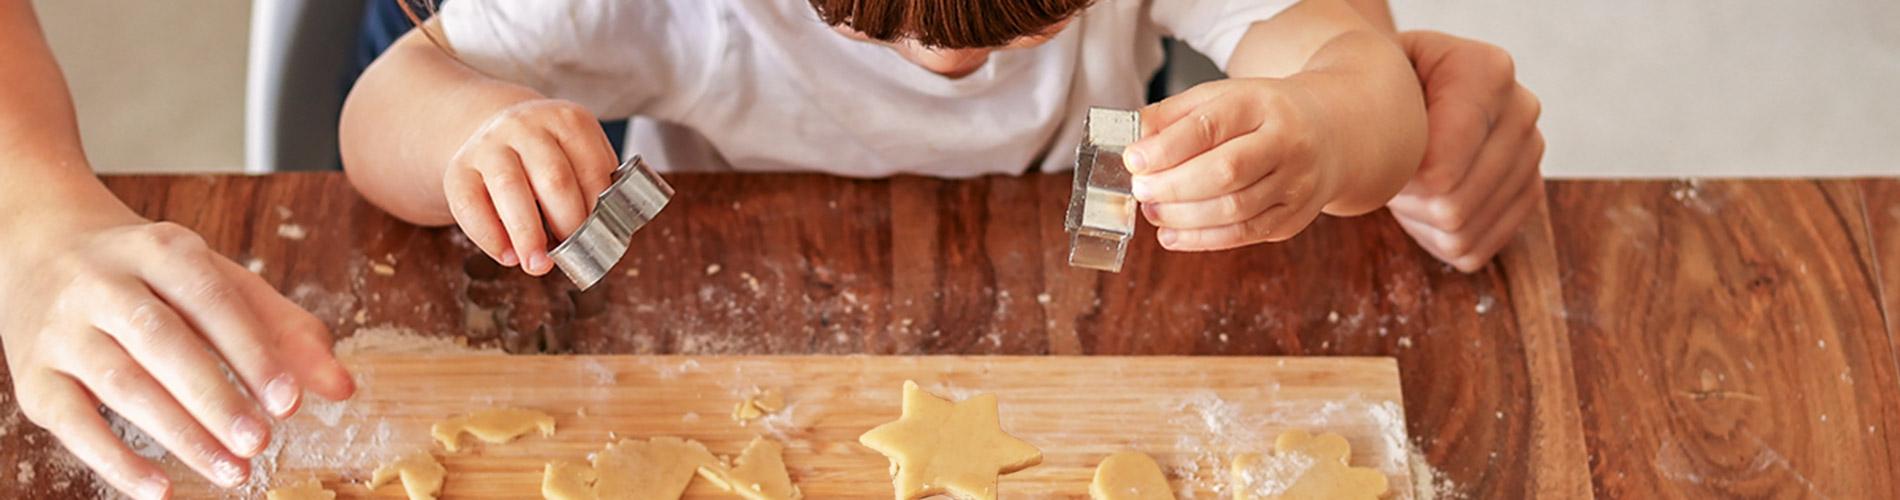 Magical Christmas Activities for Toddlers: Creating Joyful Memories